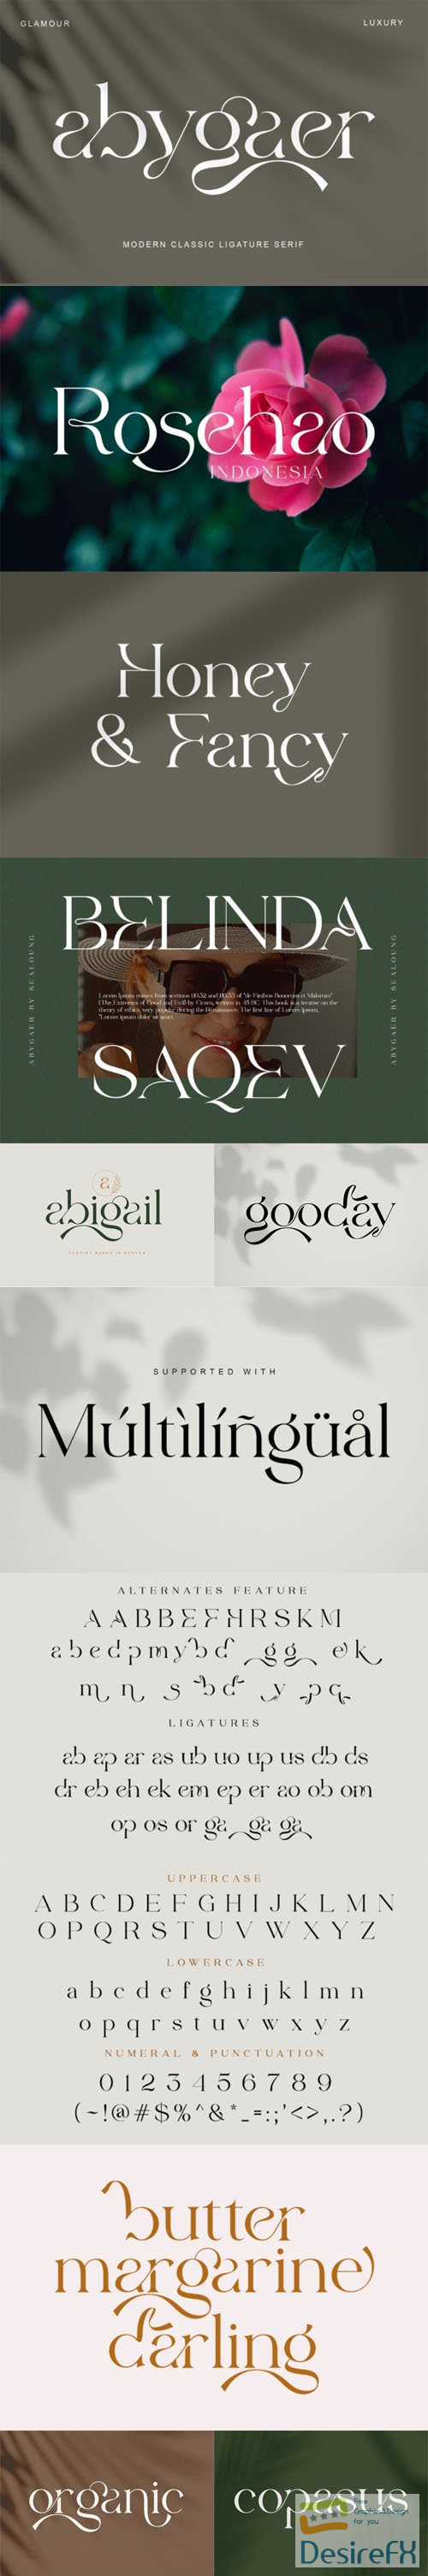 Abygaer Modern Classic Ligature Serif Font